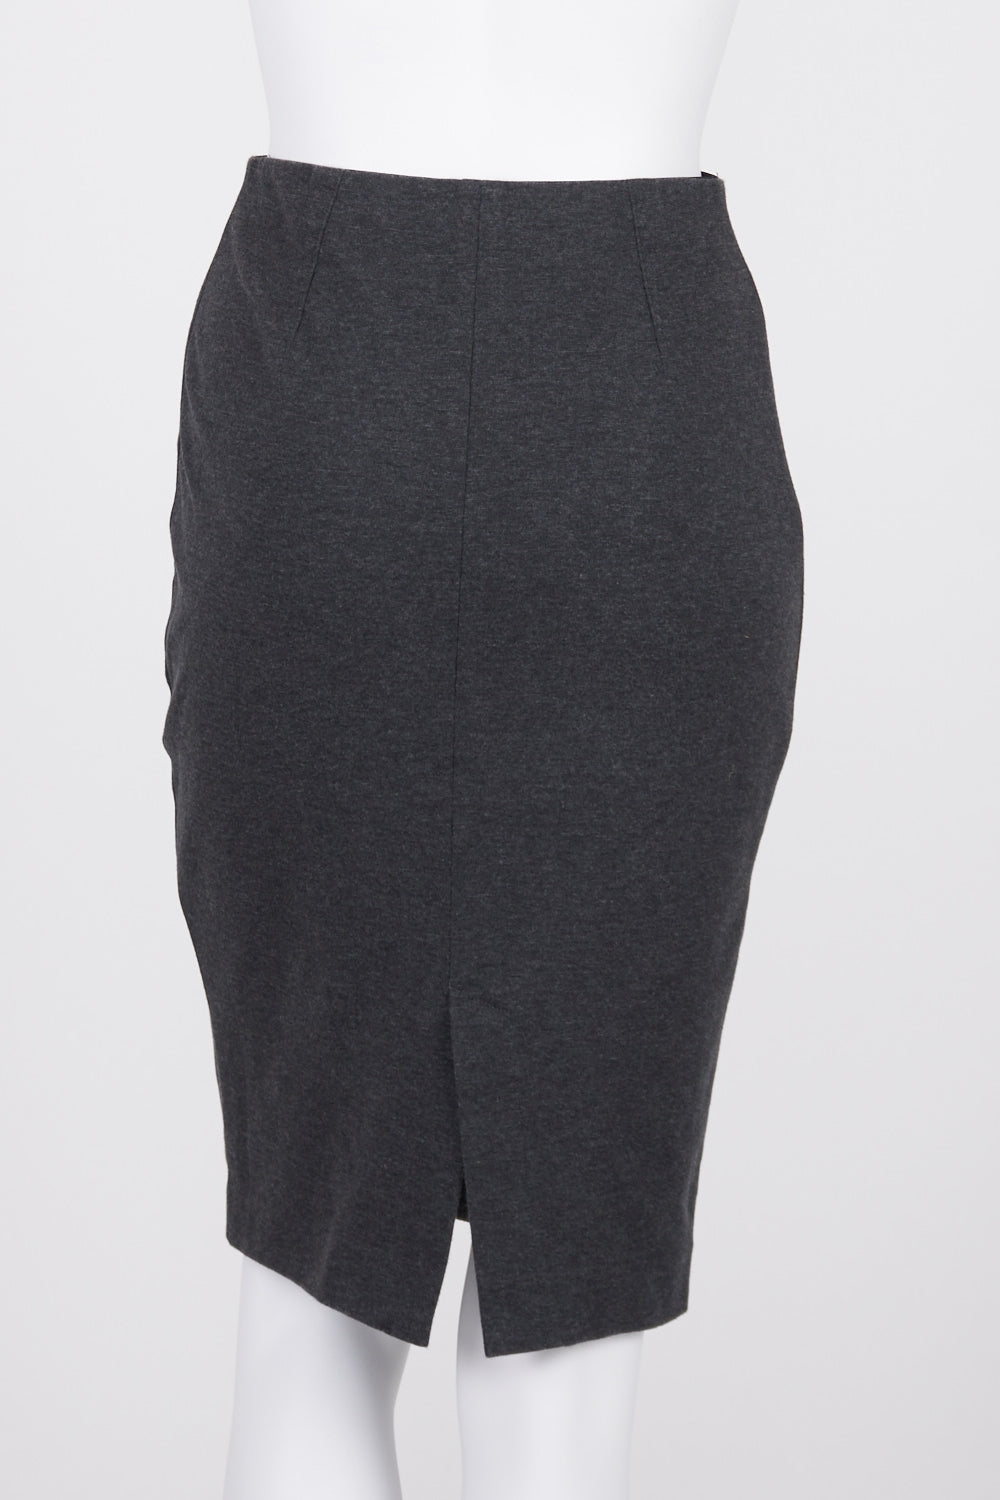 Uniqlo Grey Skirt XS